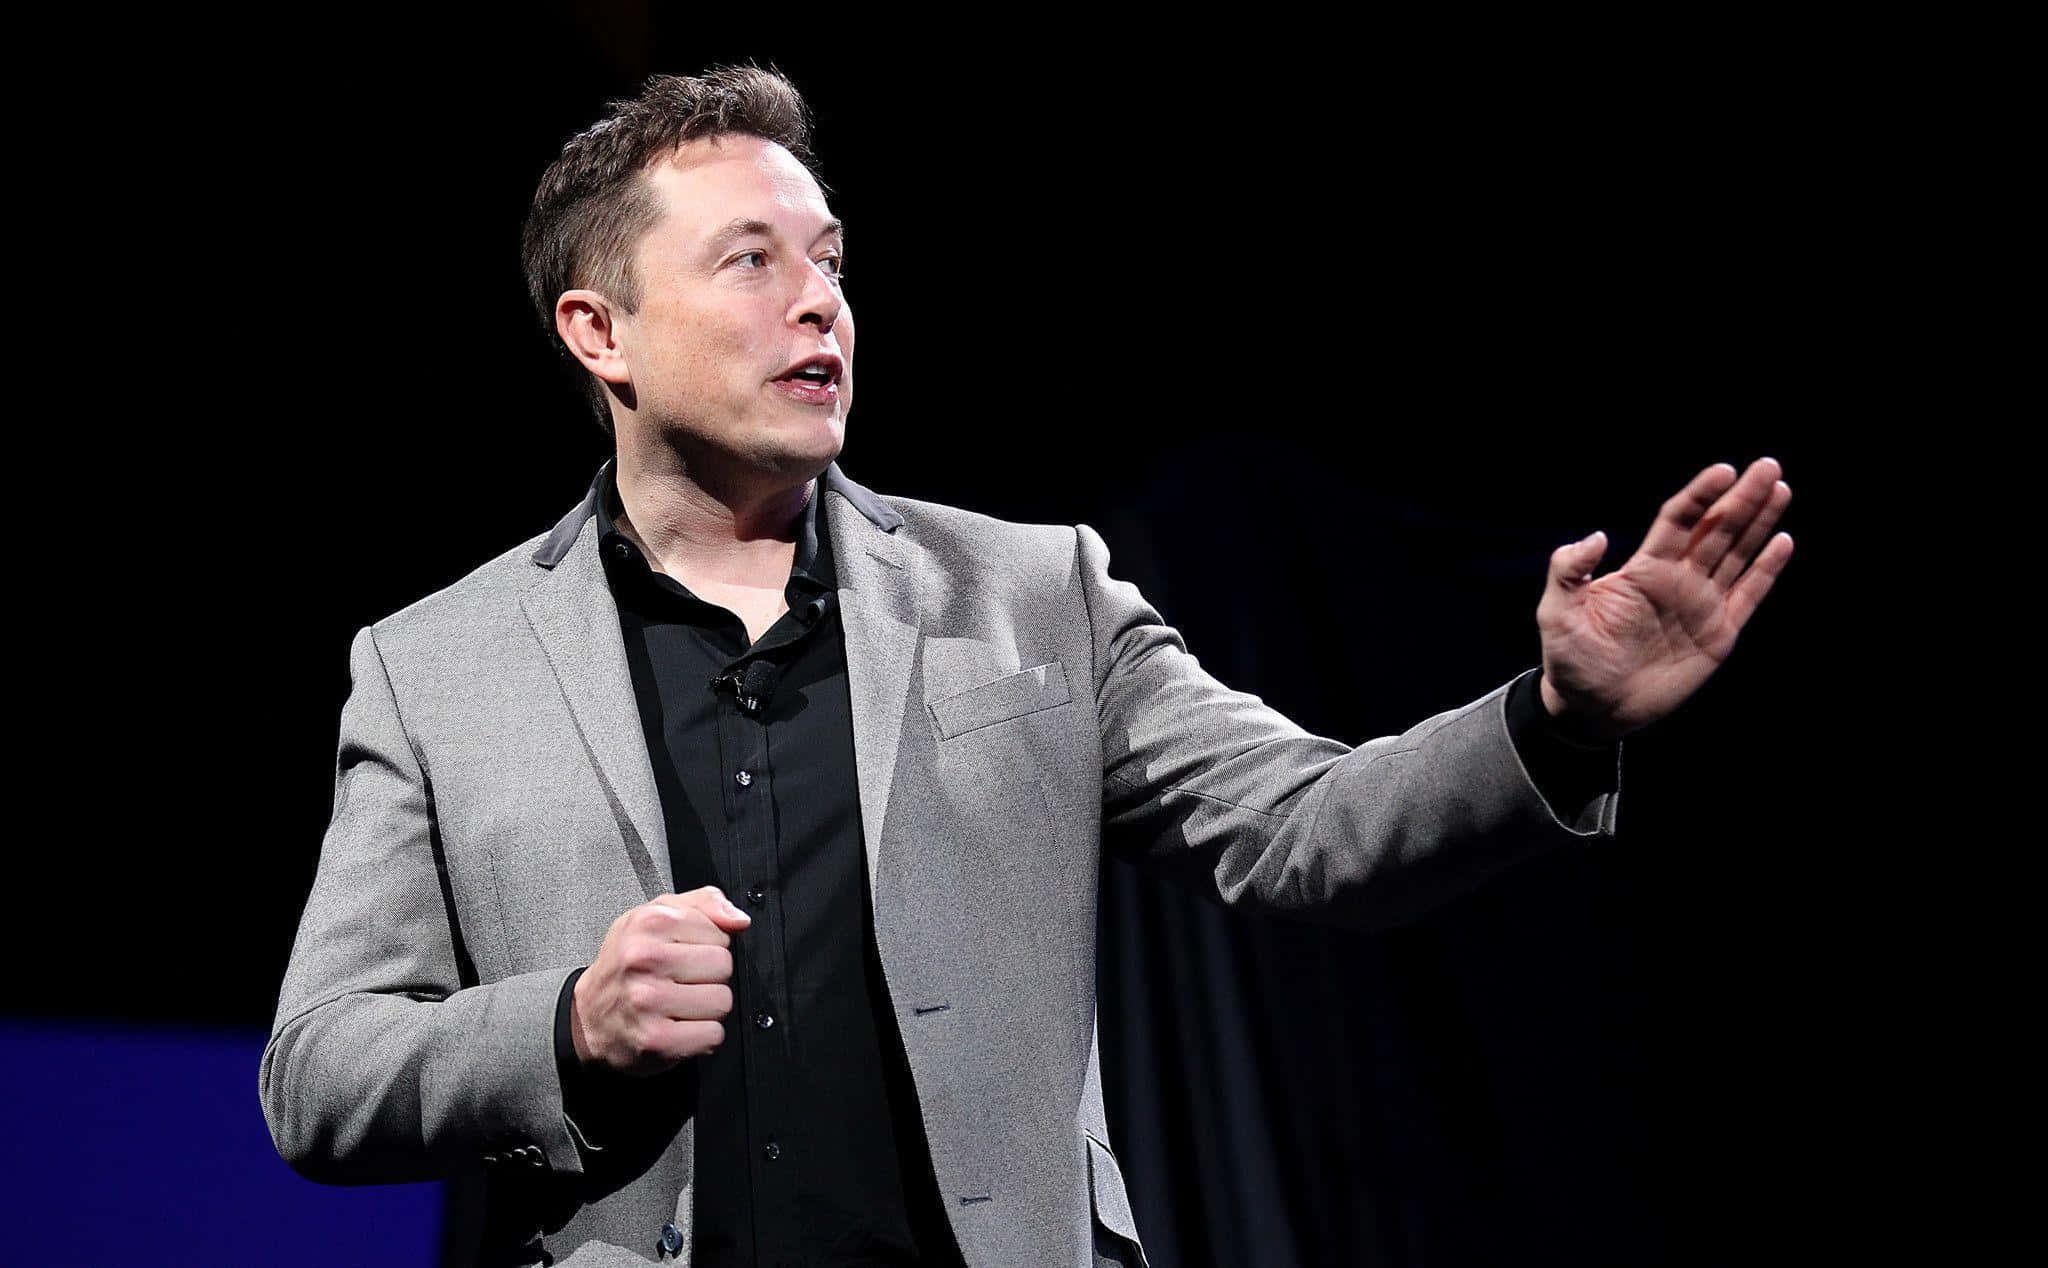 Elon Musk, Business Magnate, Visionary, and Innovator